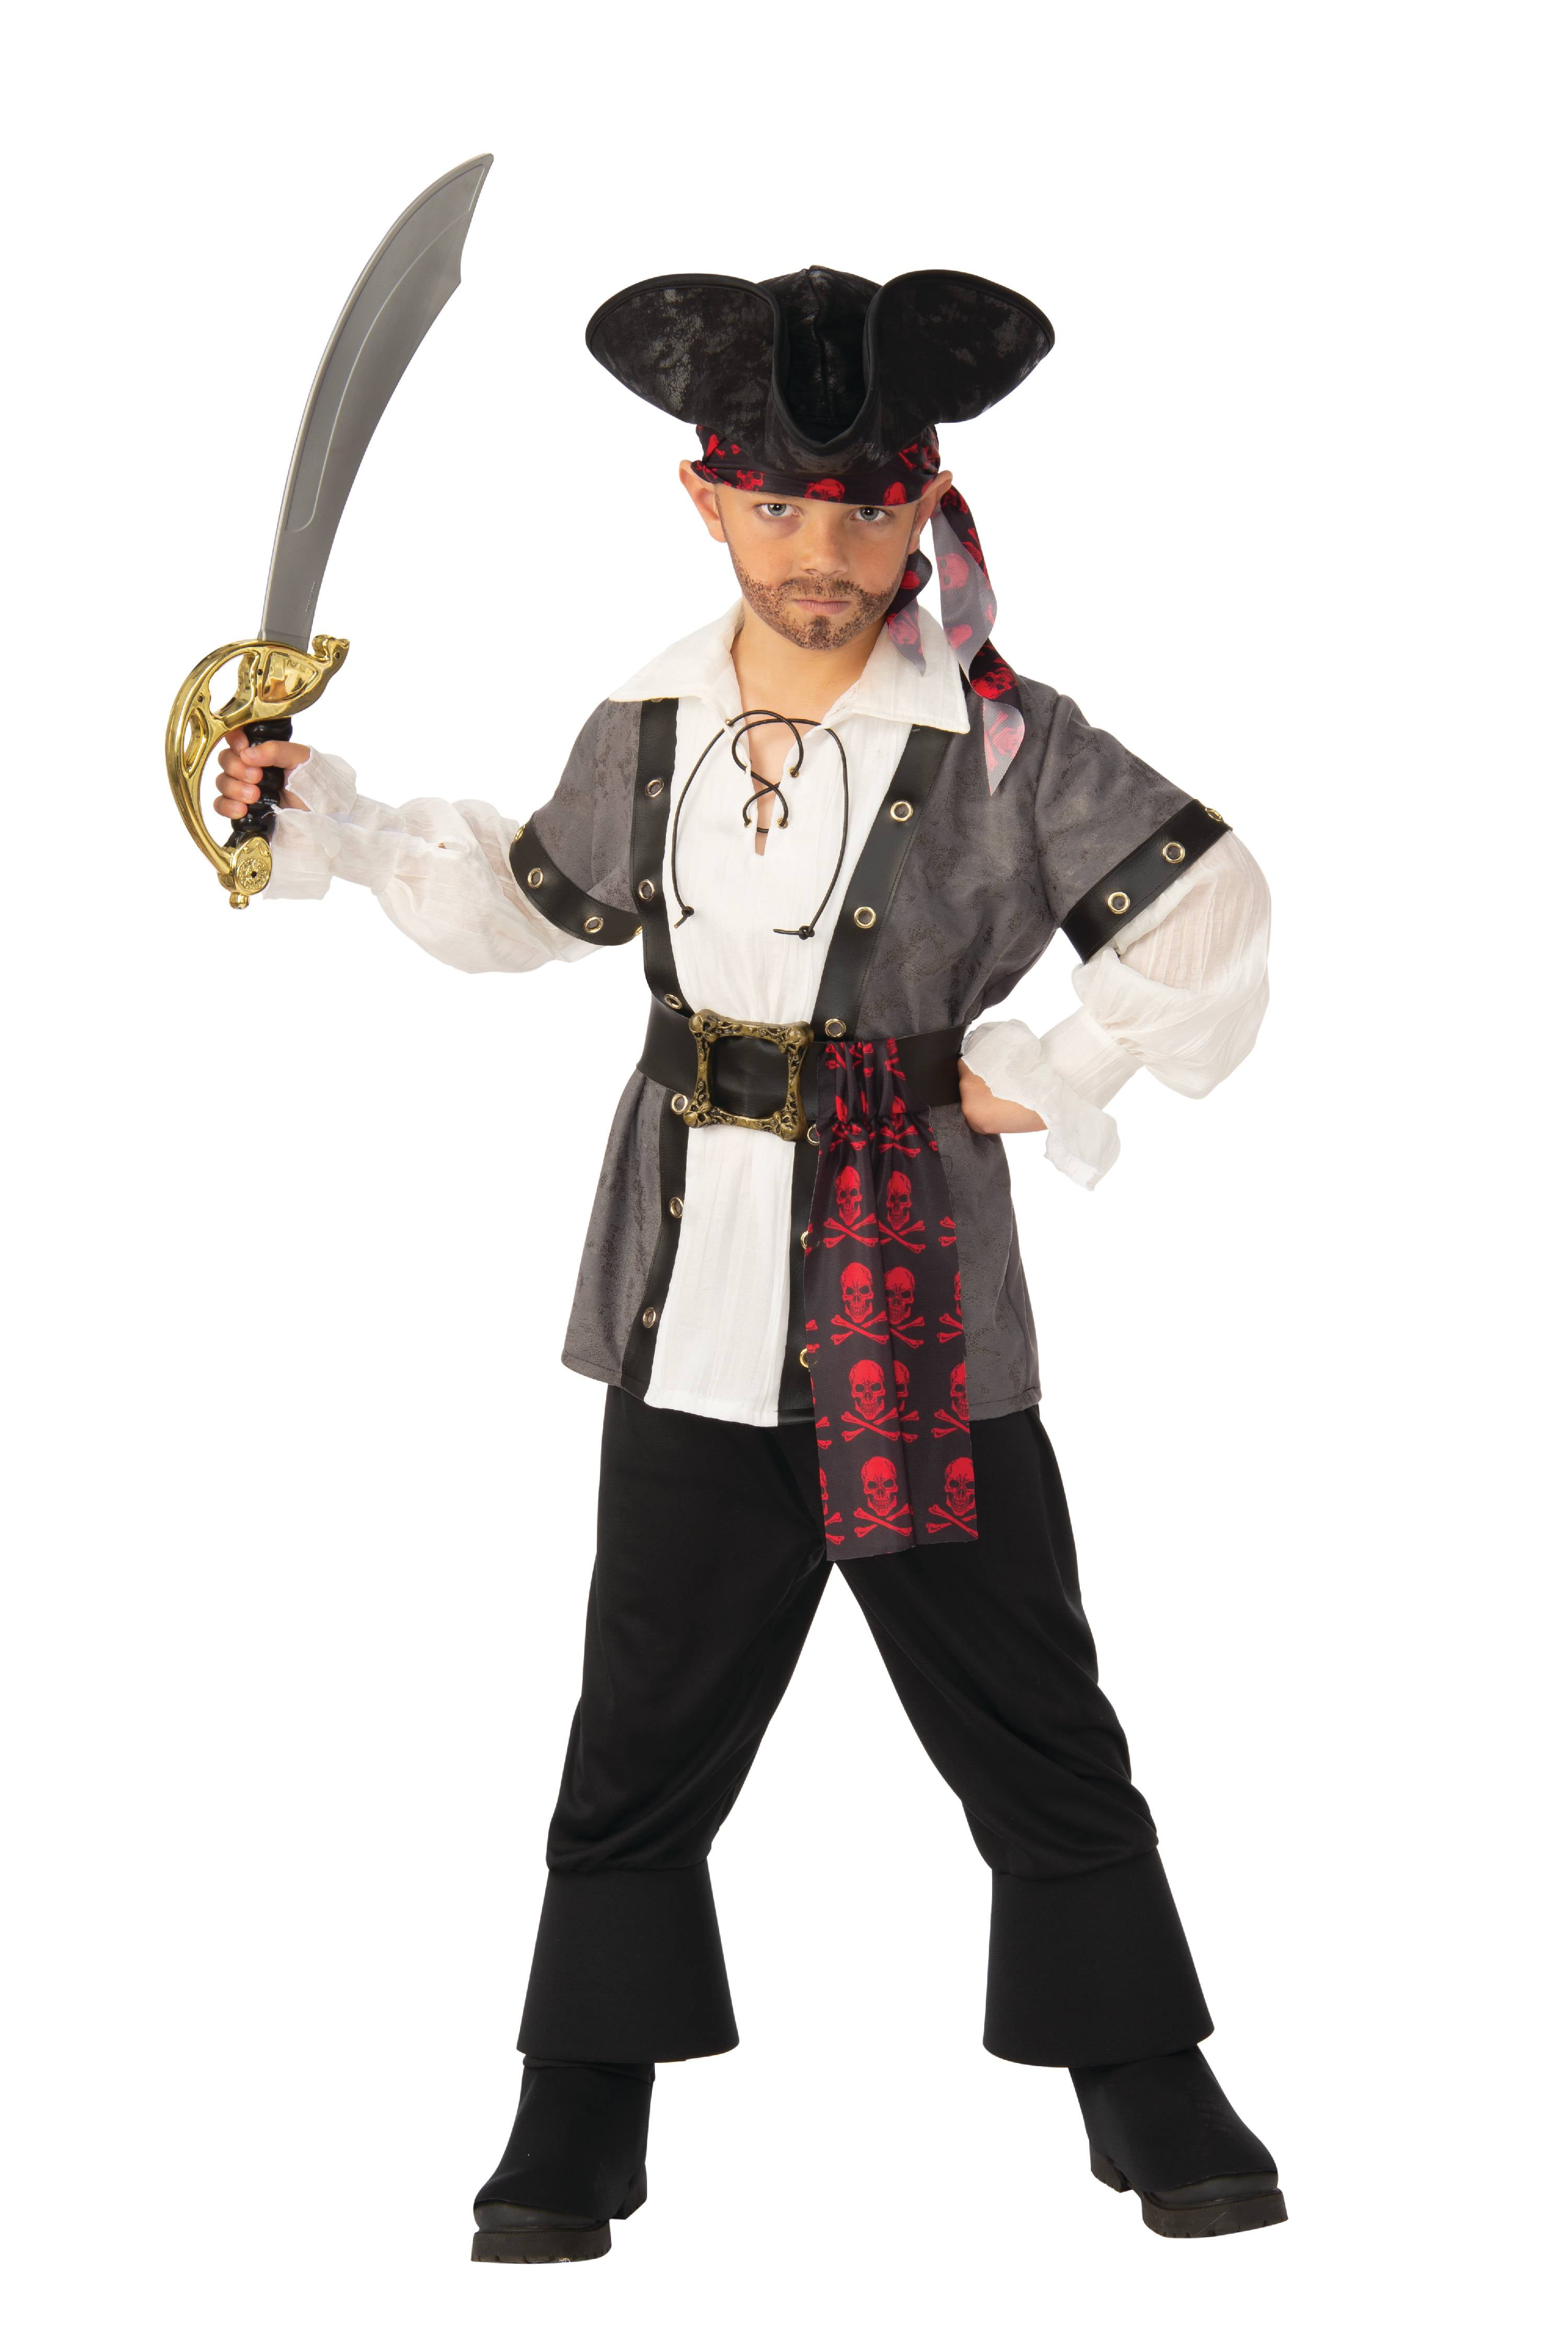 Buccaneer Gun Belt Toy Caribbean Pirate Fancy Dress Halloween Costume Accessory